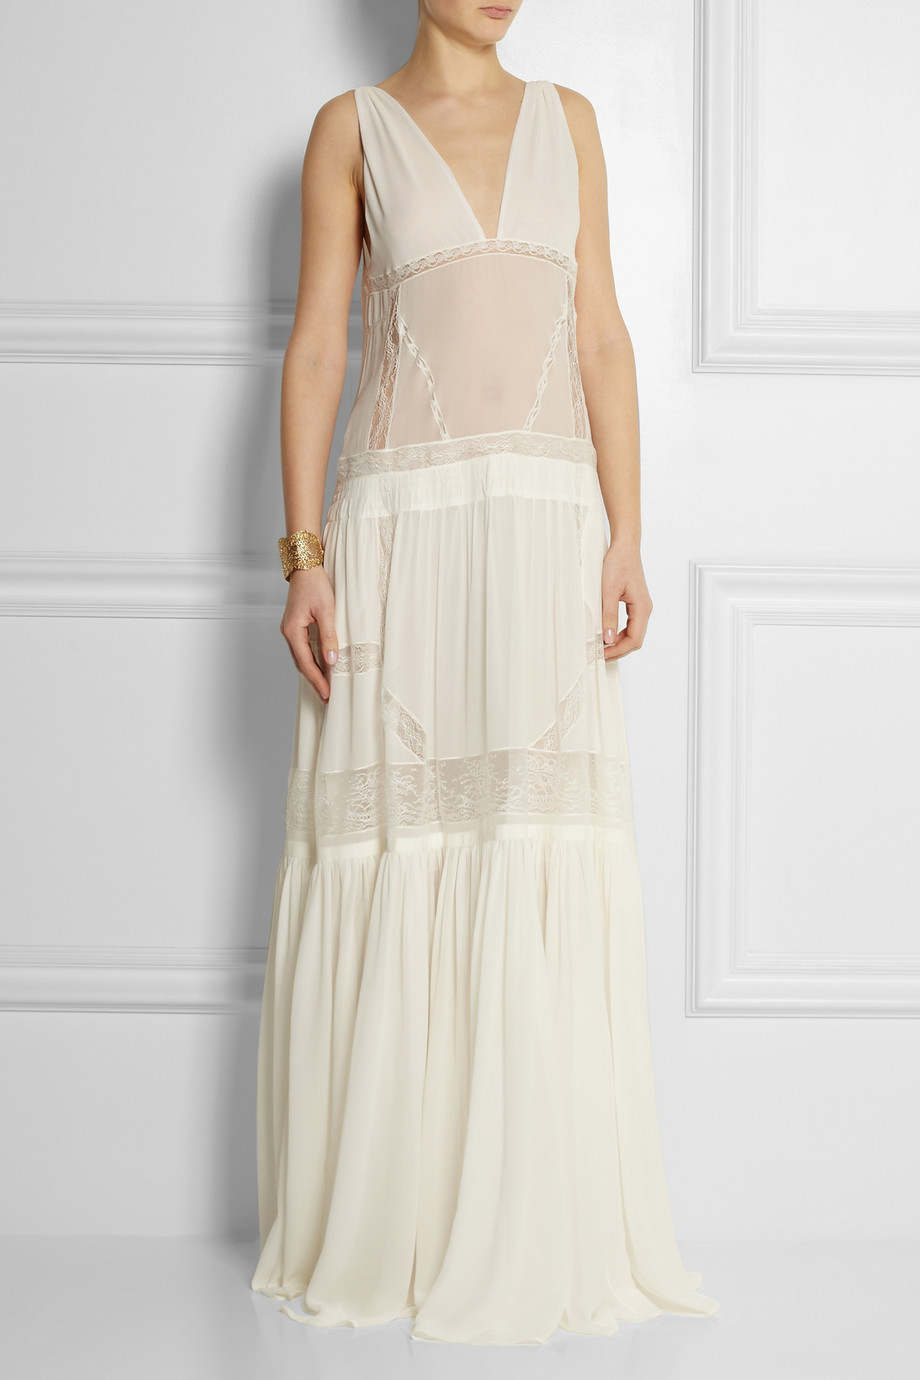 Lyst - Roberto Cavalli Lace Paneled Silk Chiffon Maxi Dress in White